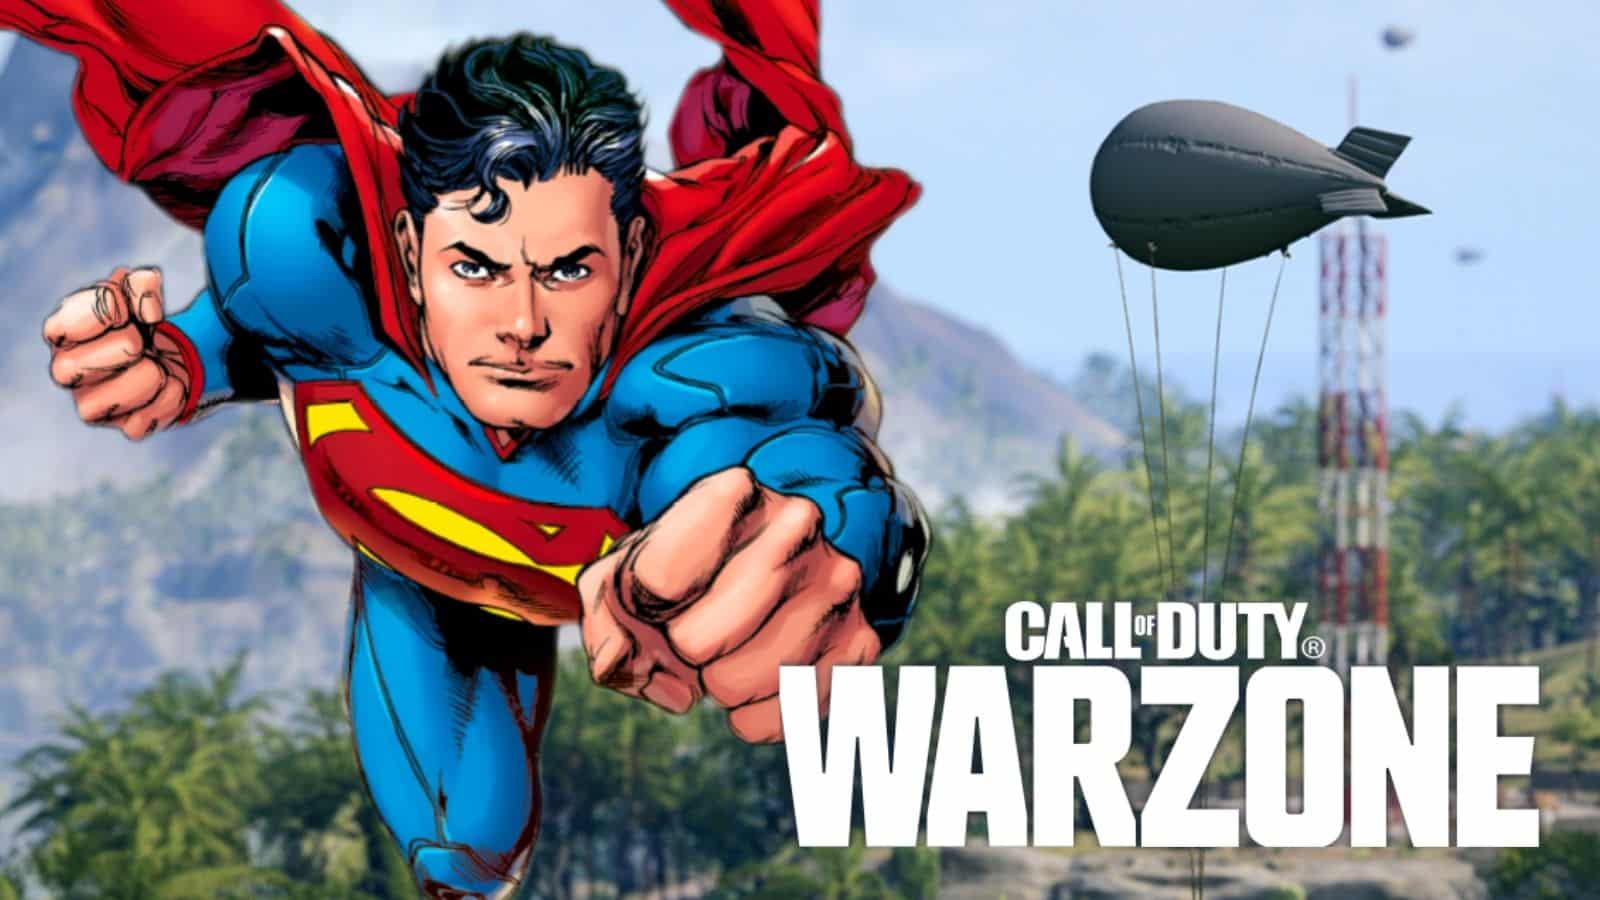 warzone superman next to redeploy balloons